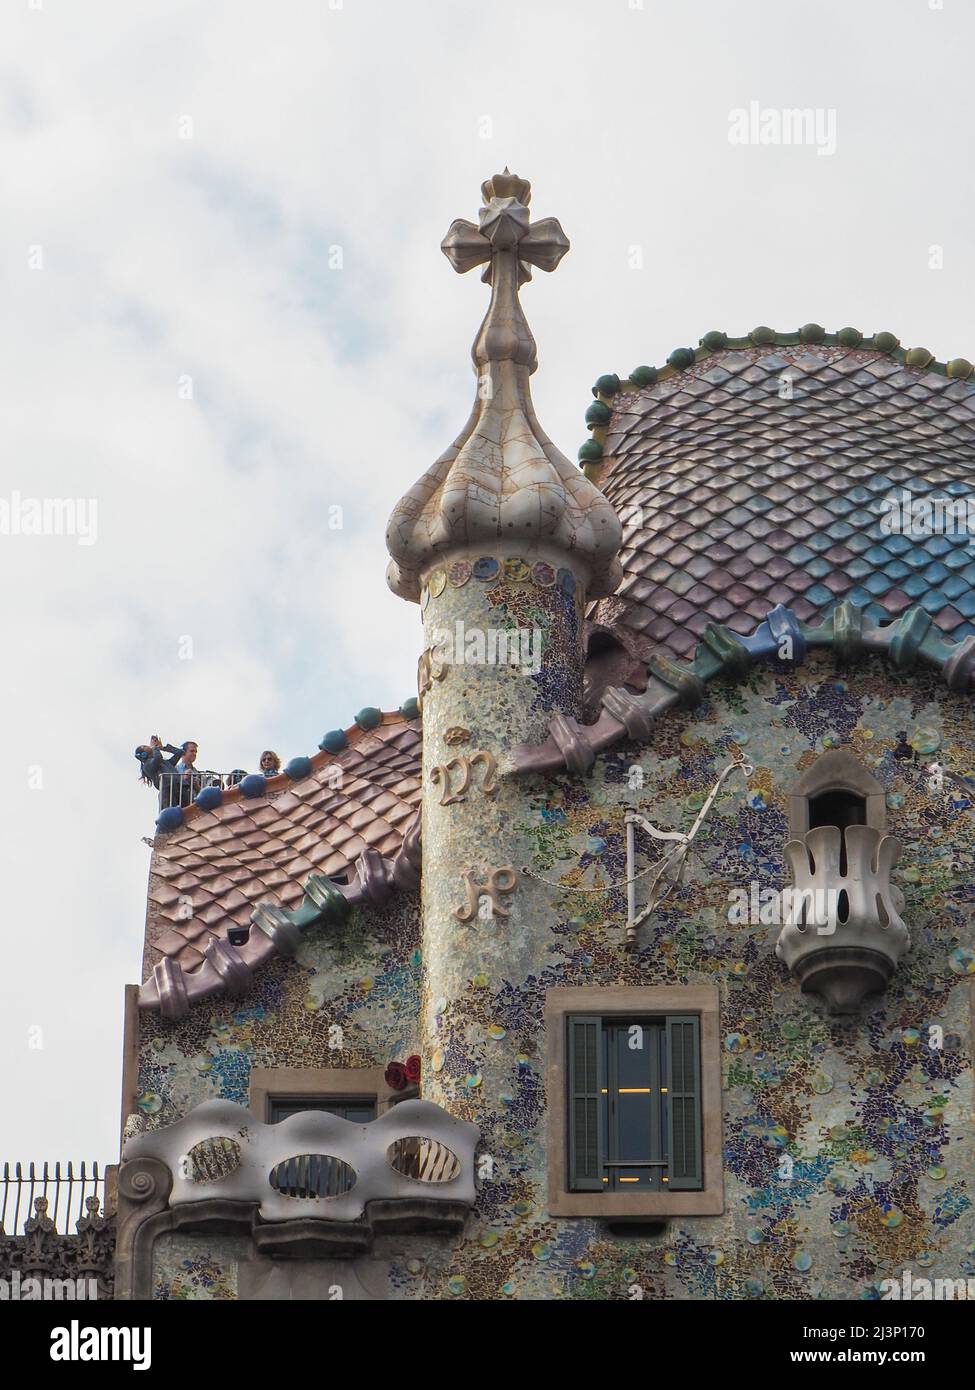 Facade of the Casa Batlò designed by the architect Antoni Gaudí, Eixample district, Barcelona, Spain, Europe Stock Photo